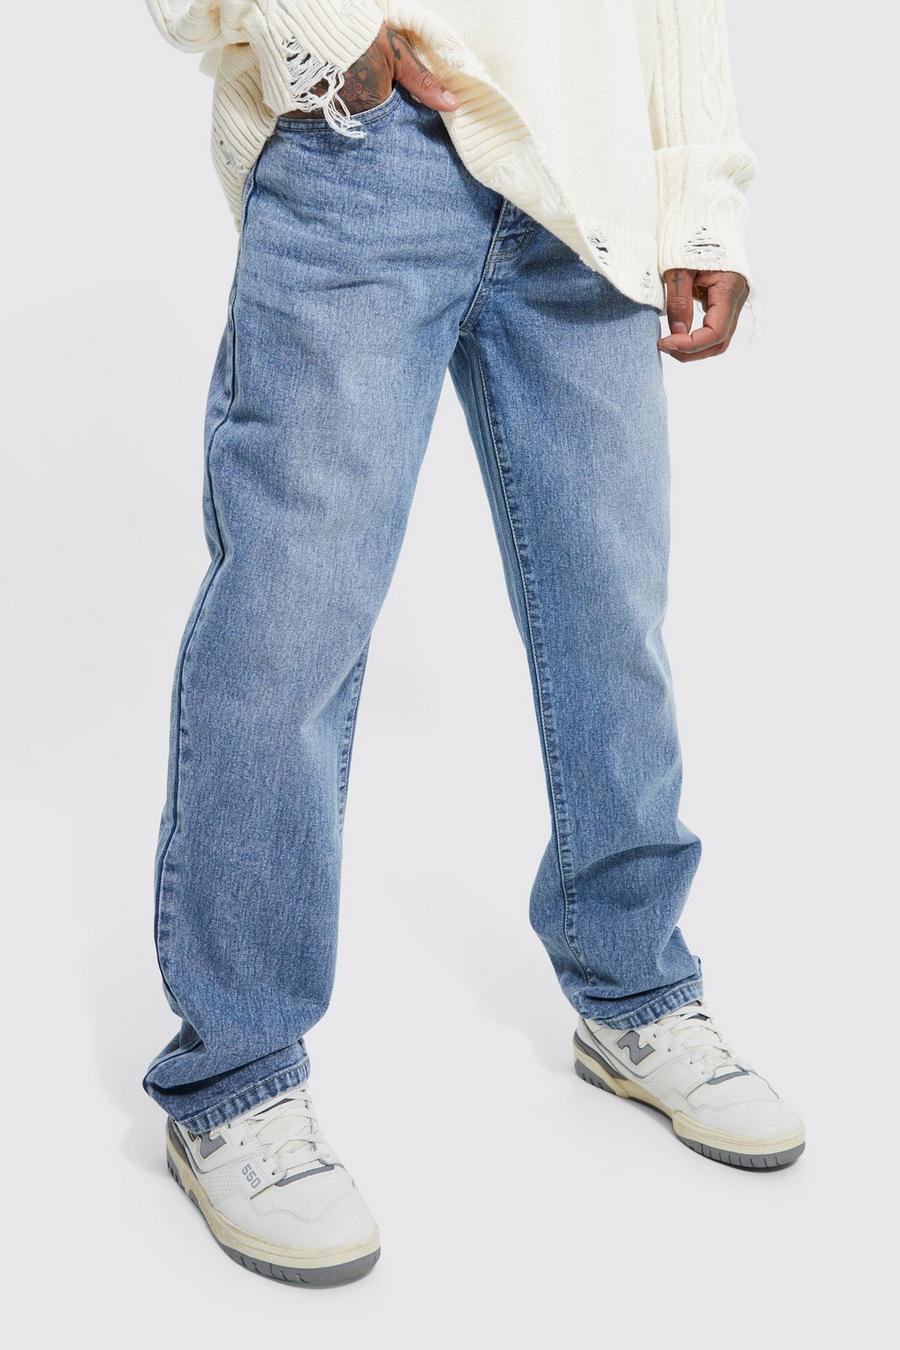 Men's Baggy Jeans Relaxed Fit Denim Loose Pants